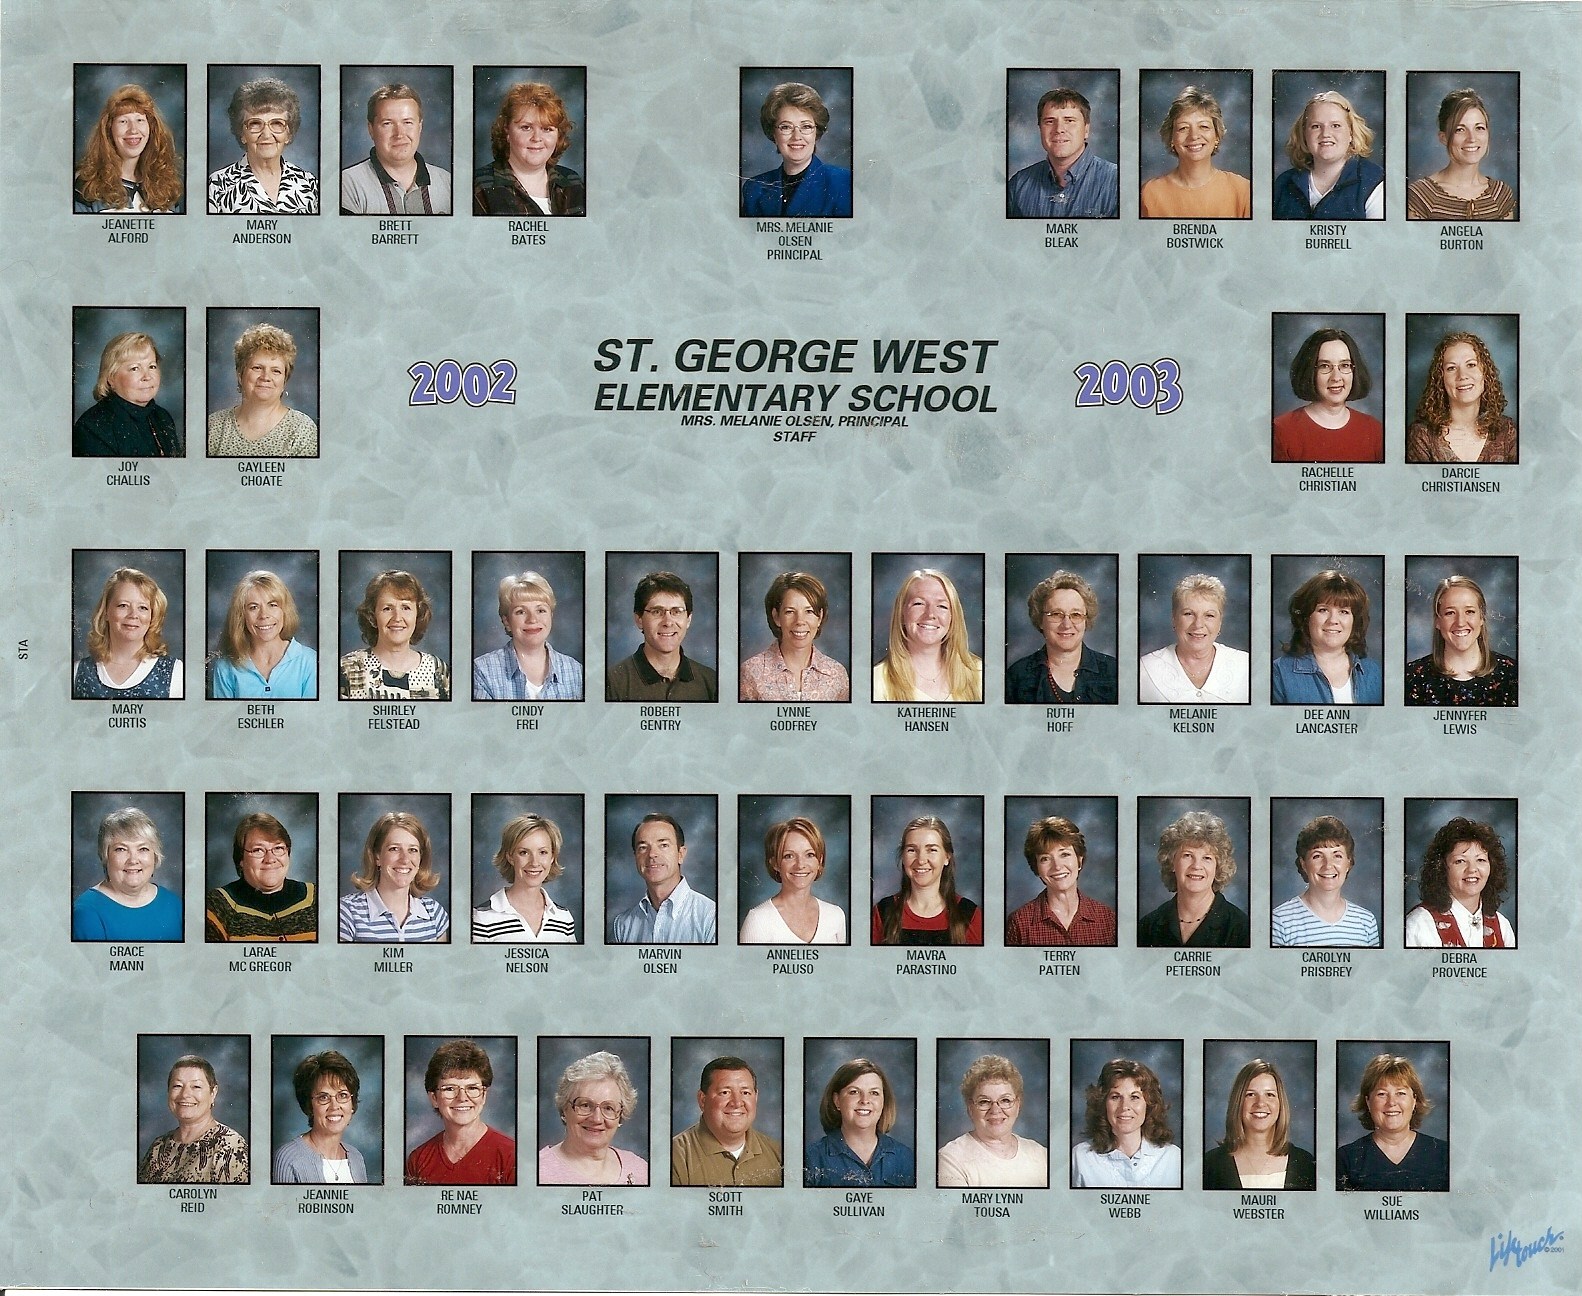 WCHS-00258 West Elementary School 2002-2003 Faculty